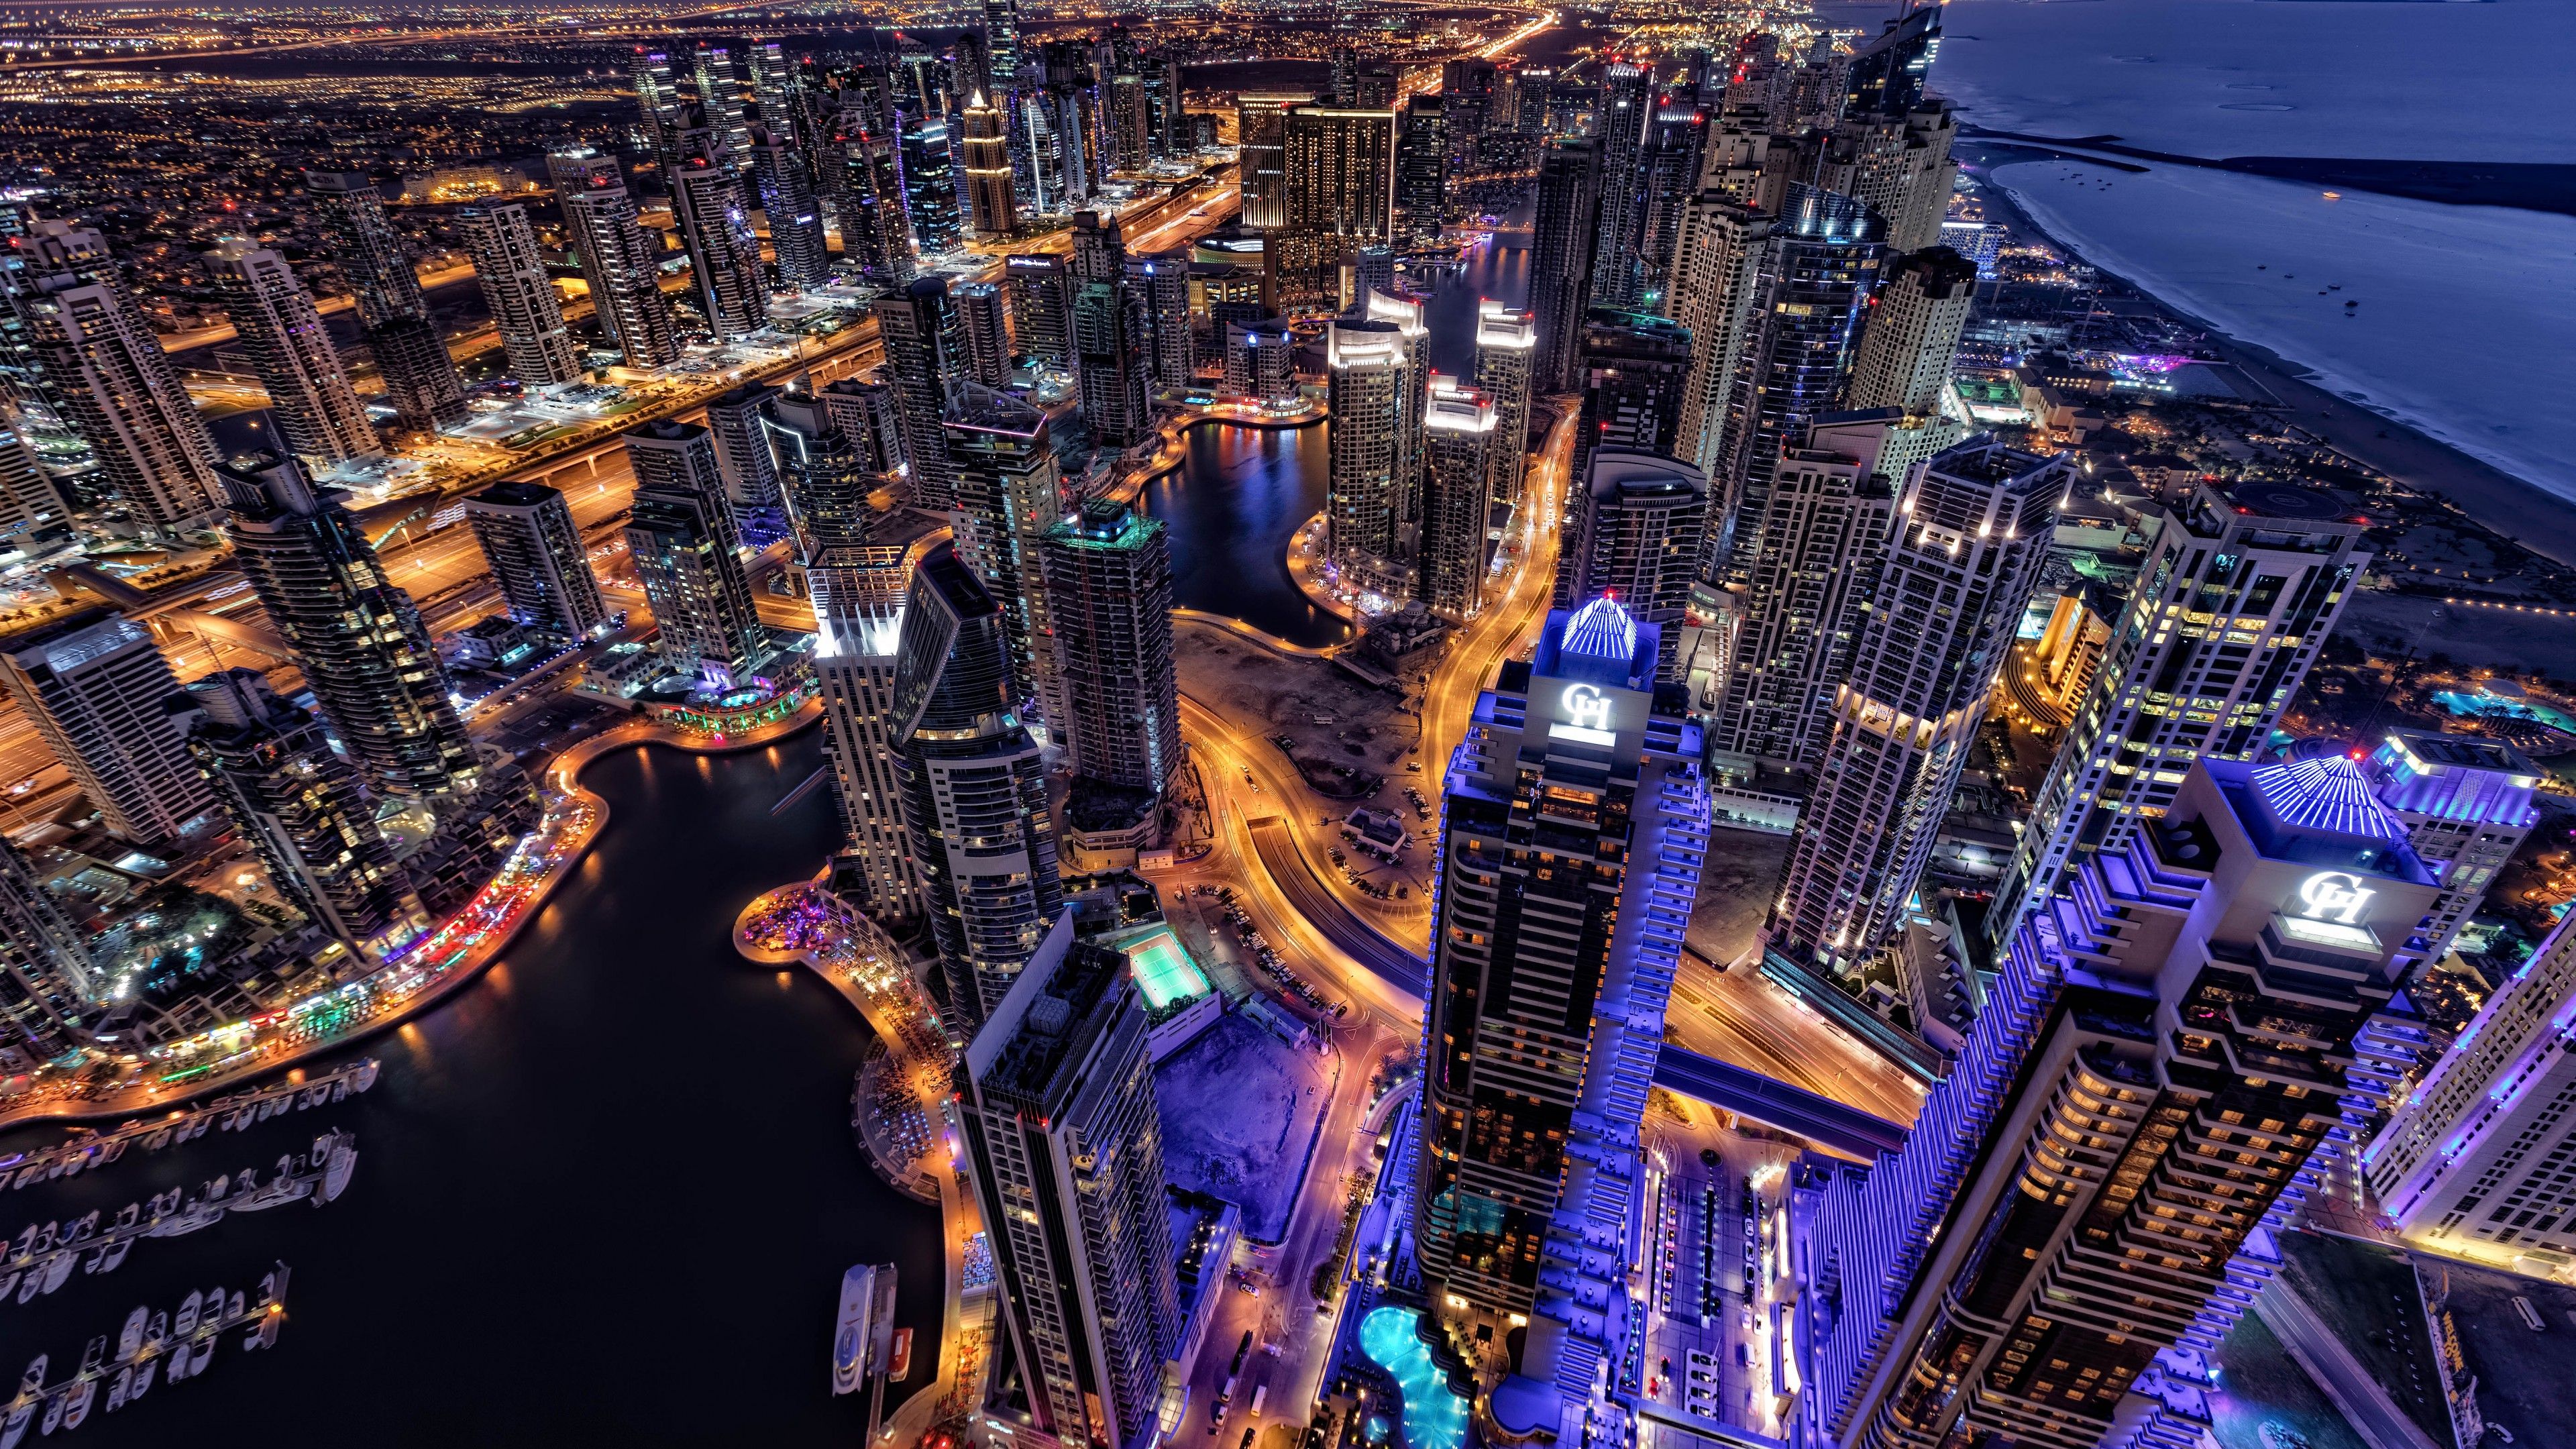 Dubai 4K Wallpaper, Cityscape, Skyline, Aerial view, Skyscrapers, City lights, Night, HDR, World